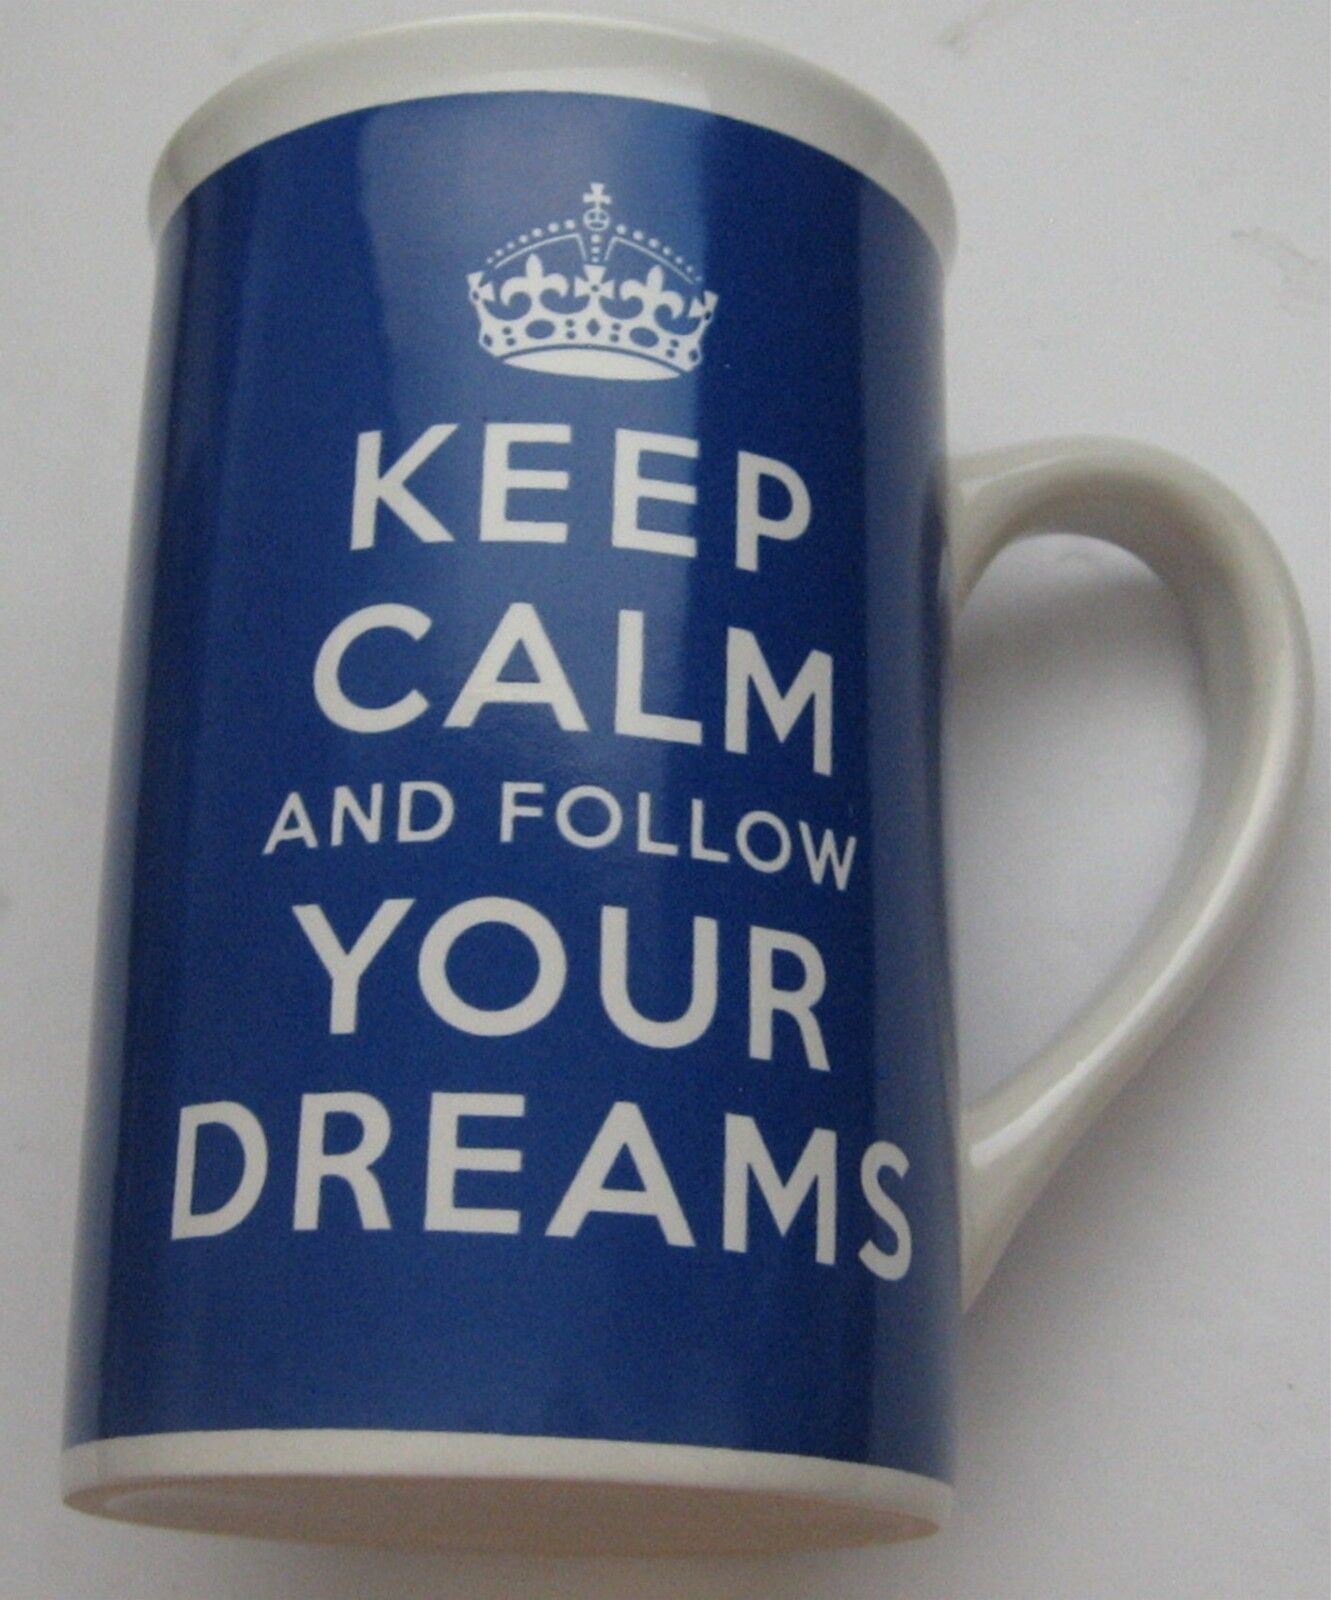 Follow Your Dreams Keep Calm Coffee Mug Blue White Cup 2015 Bay Island